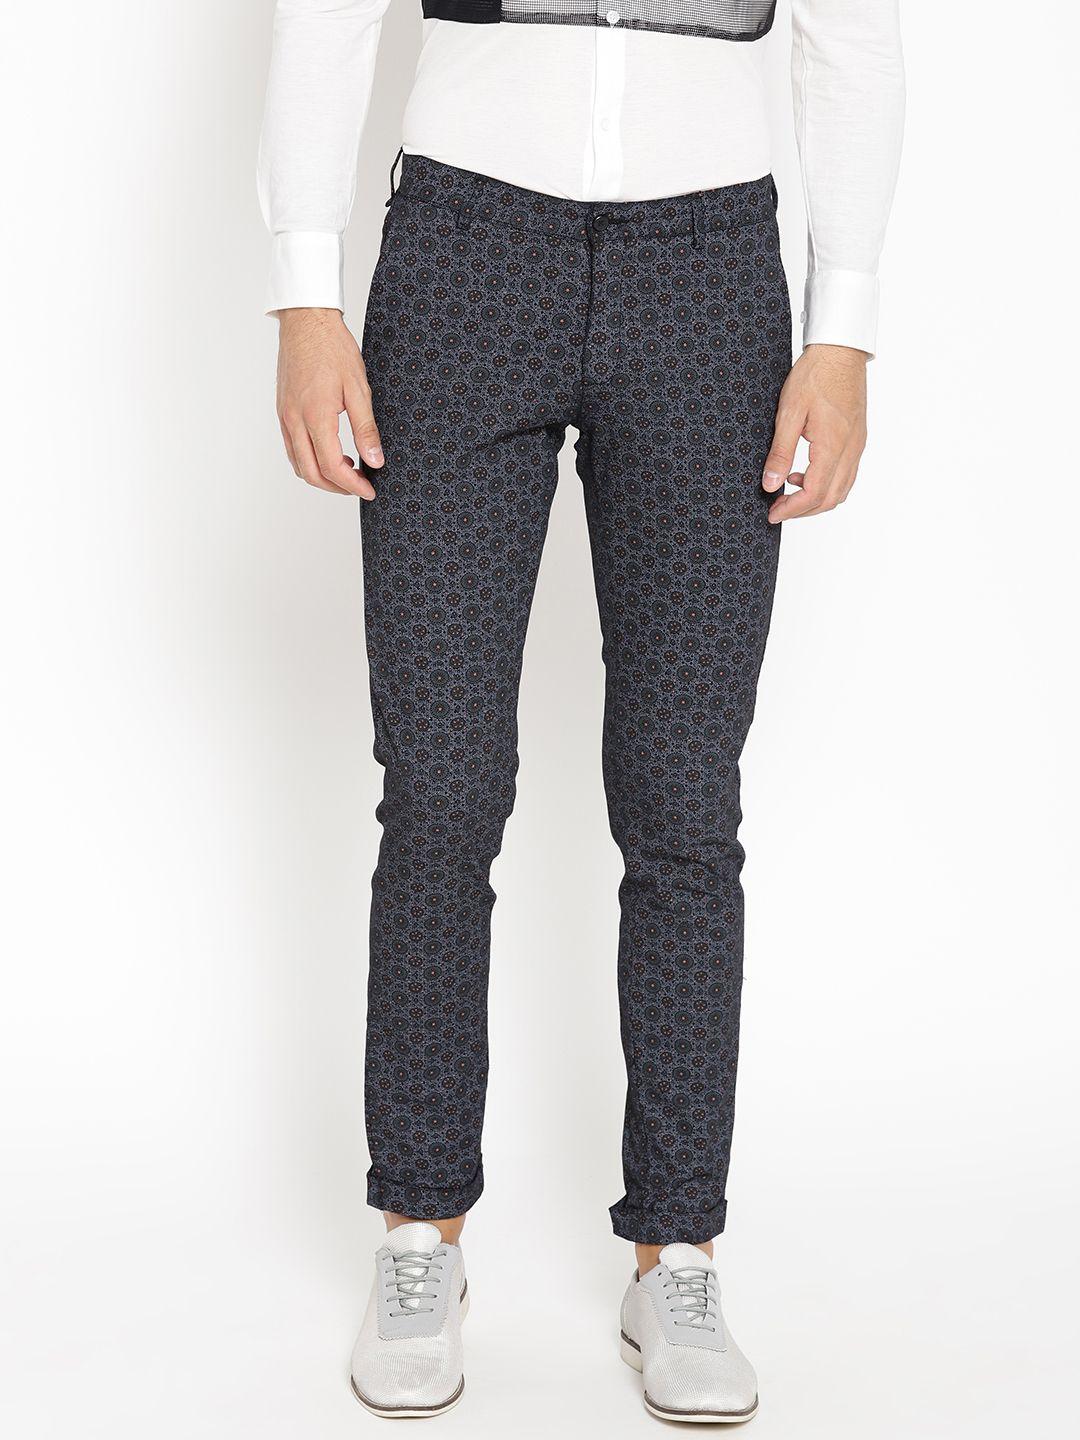 blackberrys-men-charcoal-grey-printed-z91-slim-fit-casual-trousers